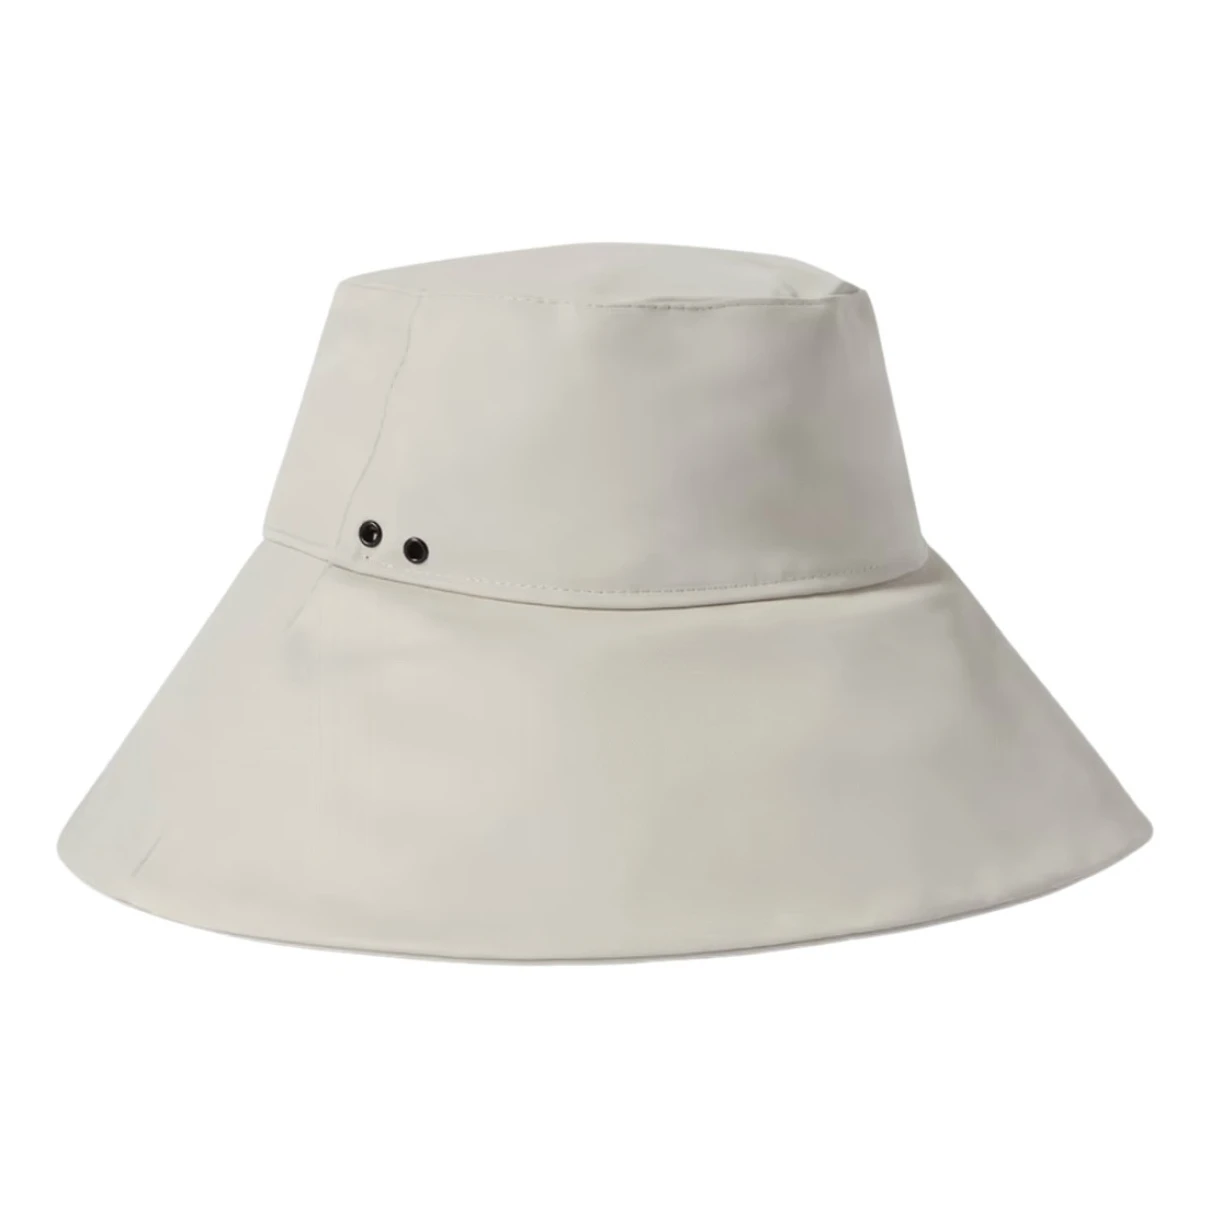 accessories Max Mara hats for Female Cloth 57 cm. Used condition